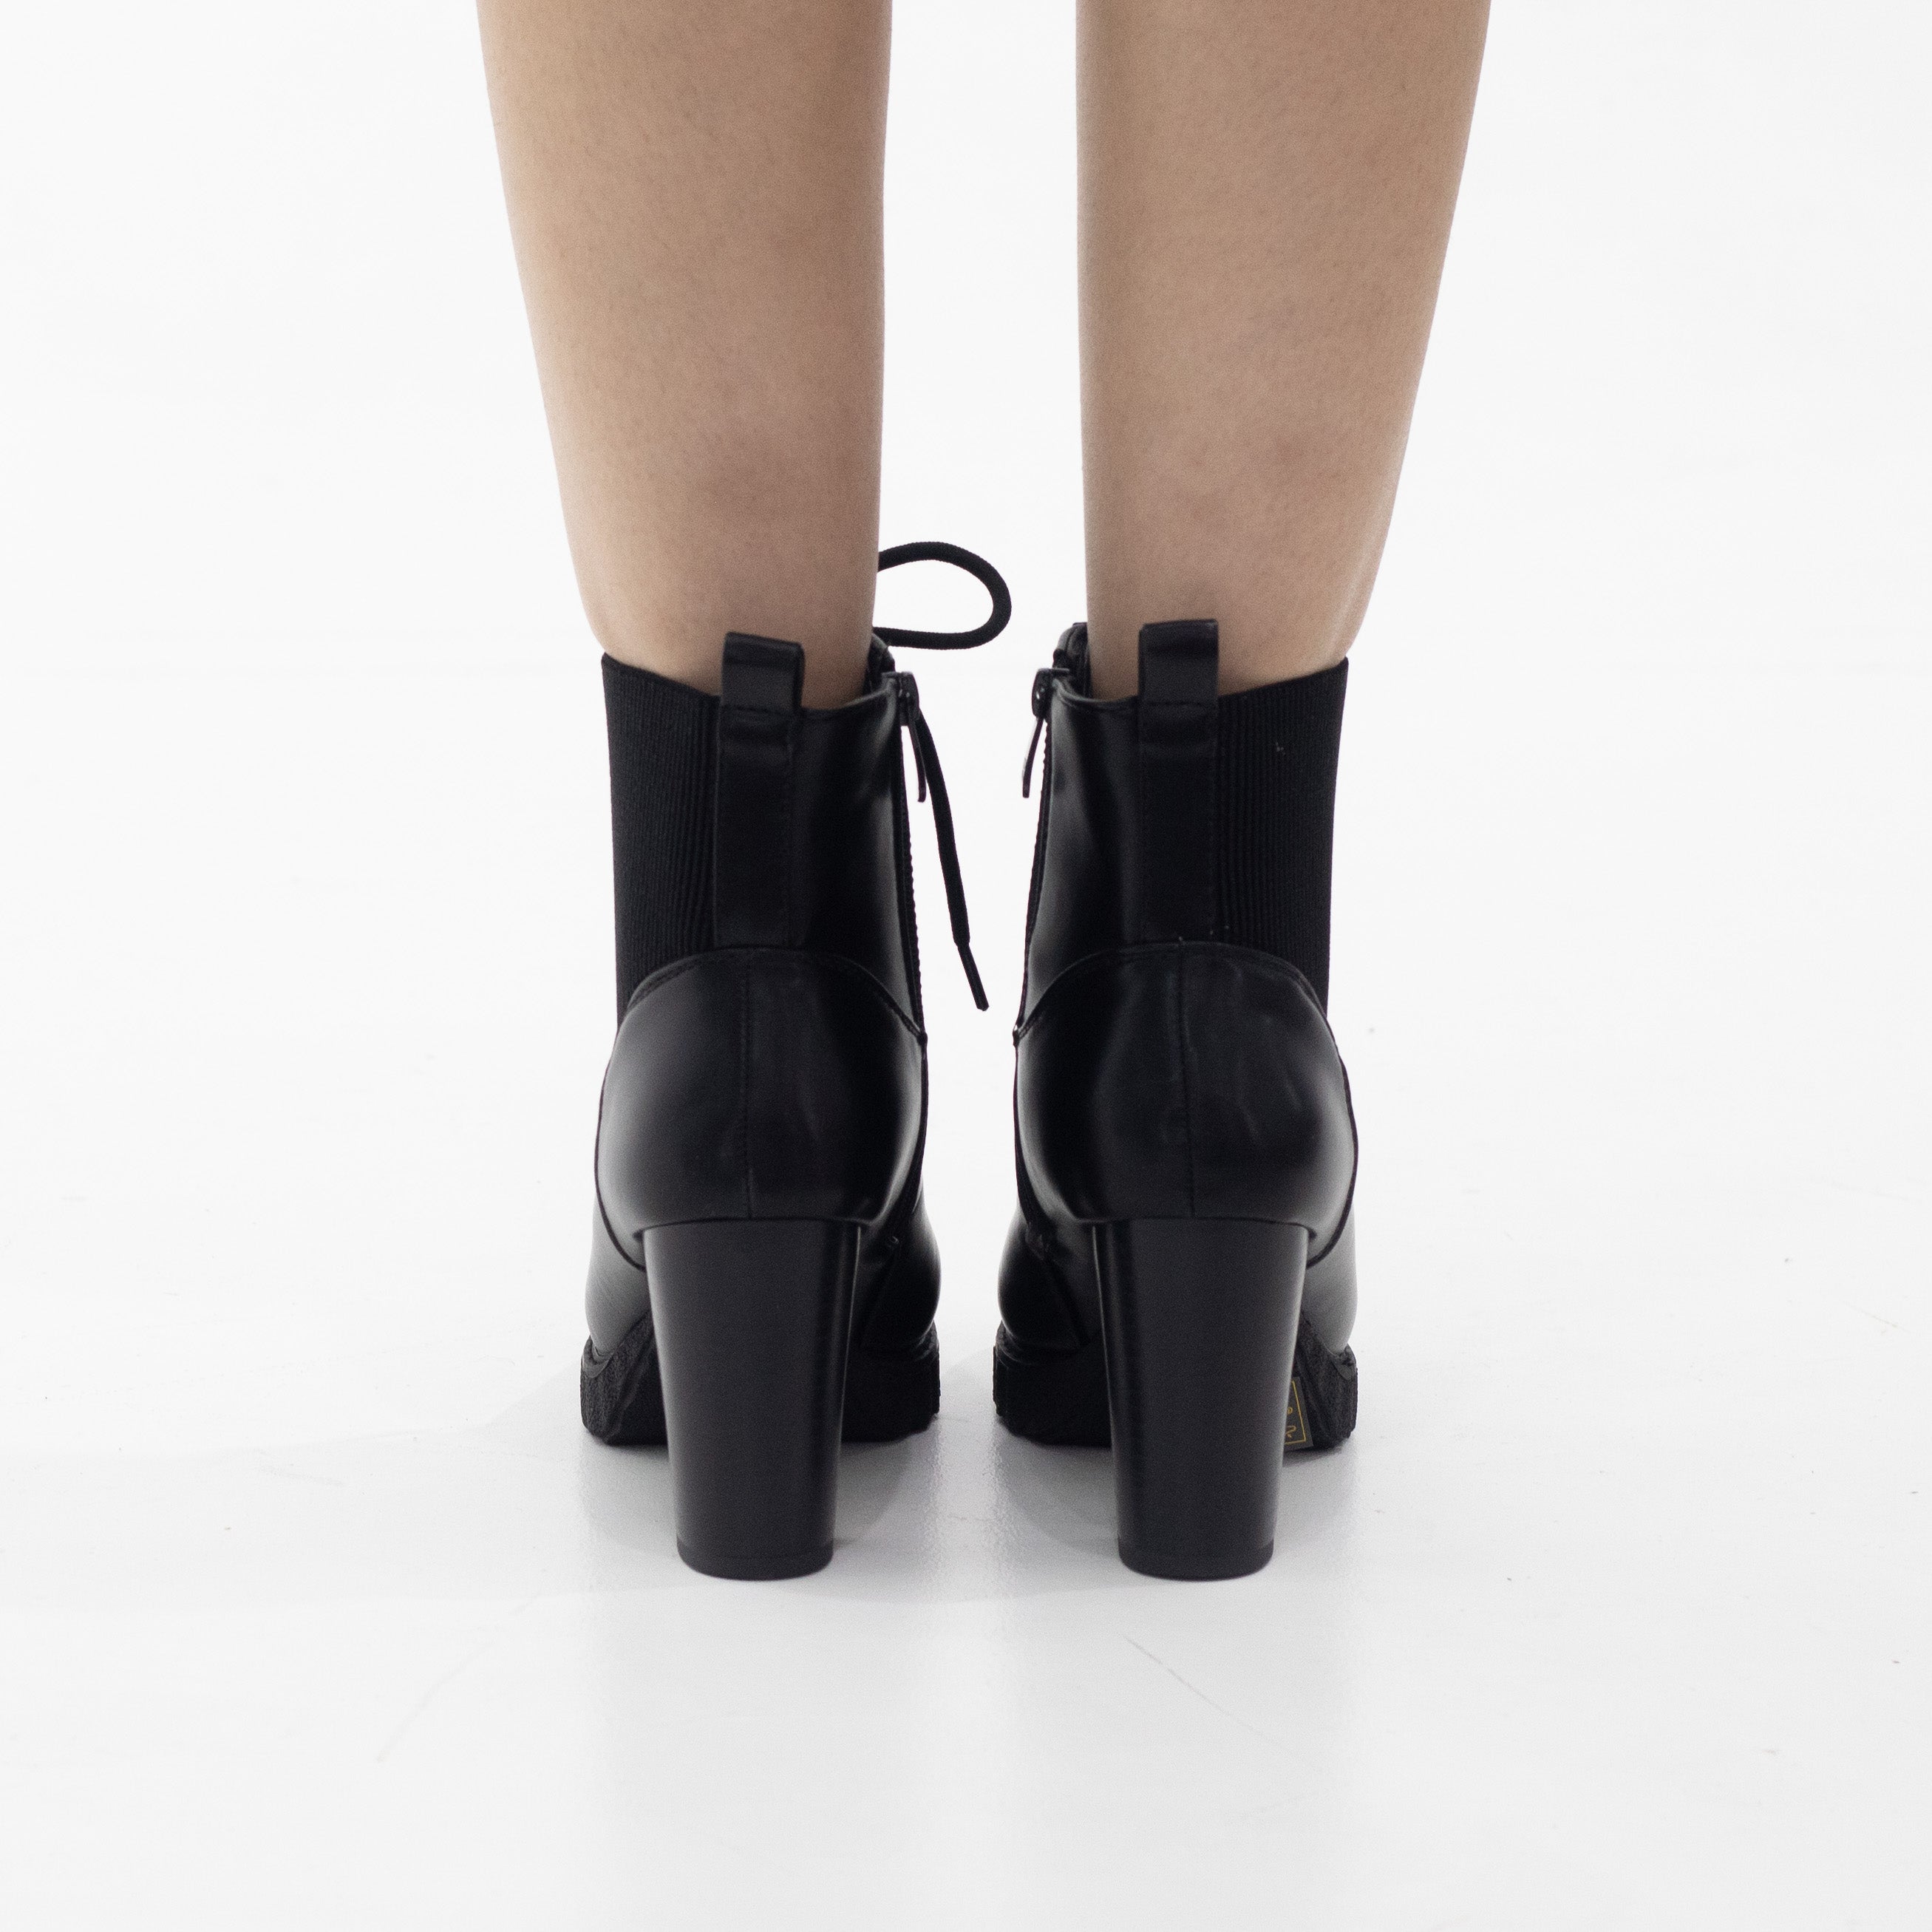 Black 8.5cm heel lace up ankle boot zelle